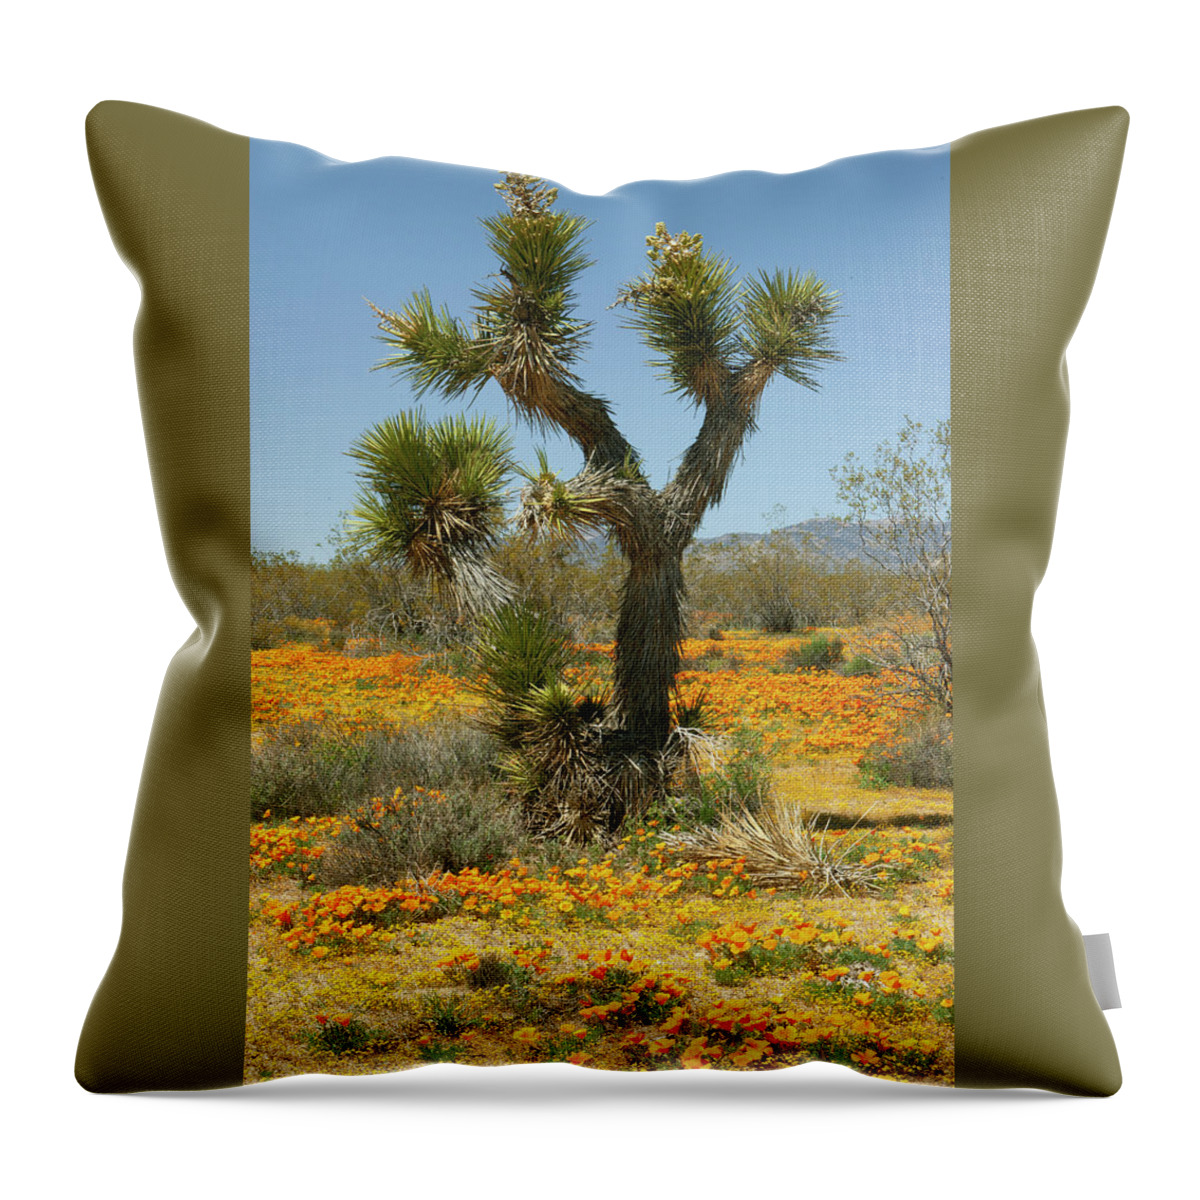 Mojave Desert Wildflowers Throw Pillow featuring the photograph Joshua Tree and Wildflowers in Mojave Desert by Ram Vasudev